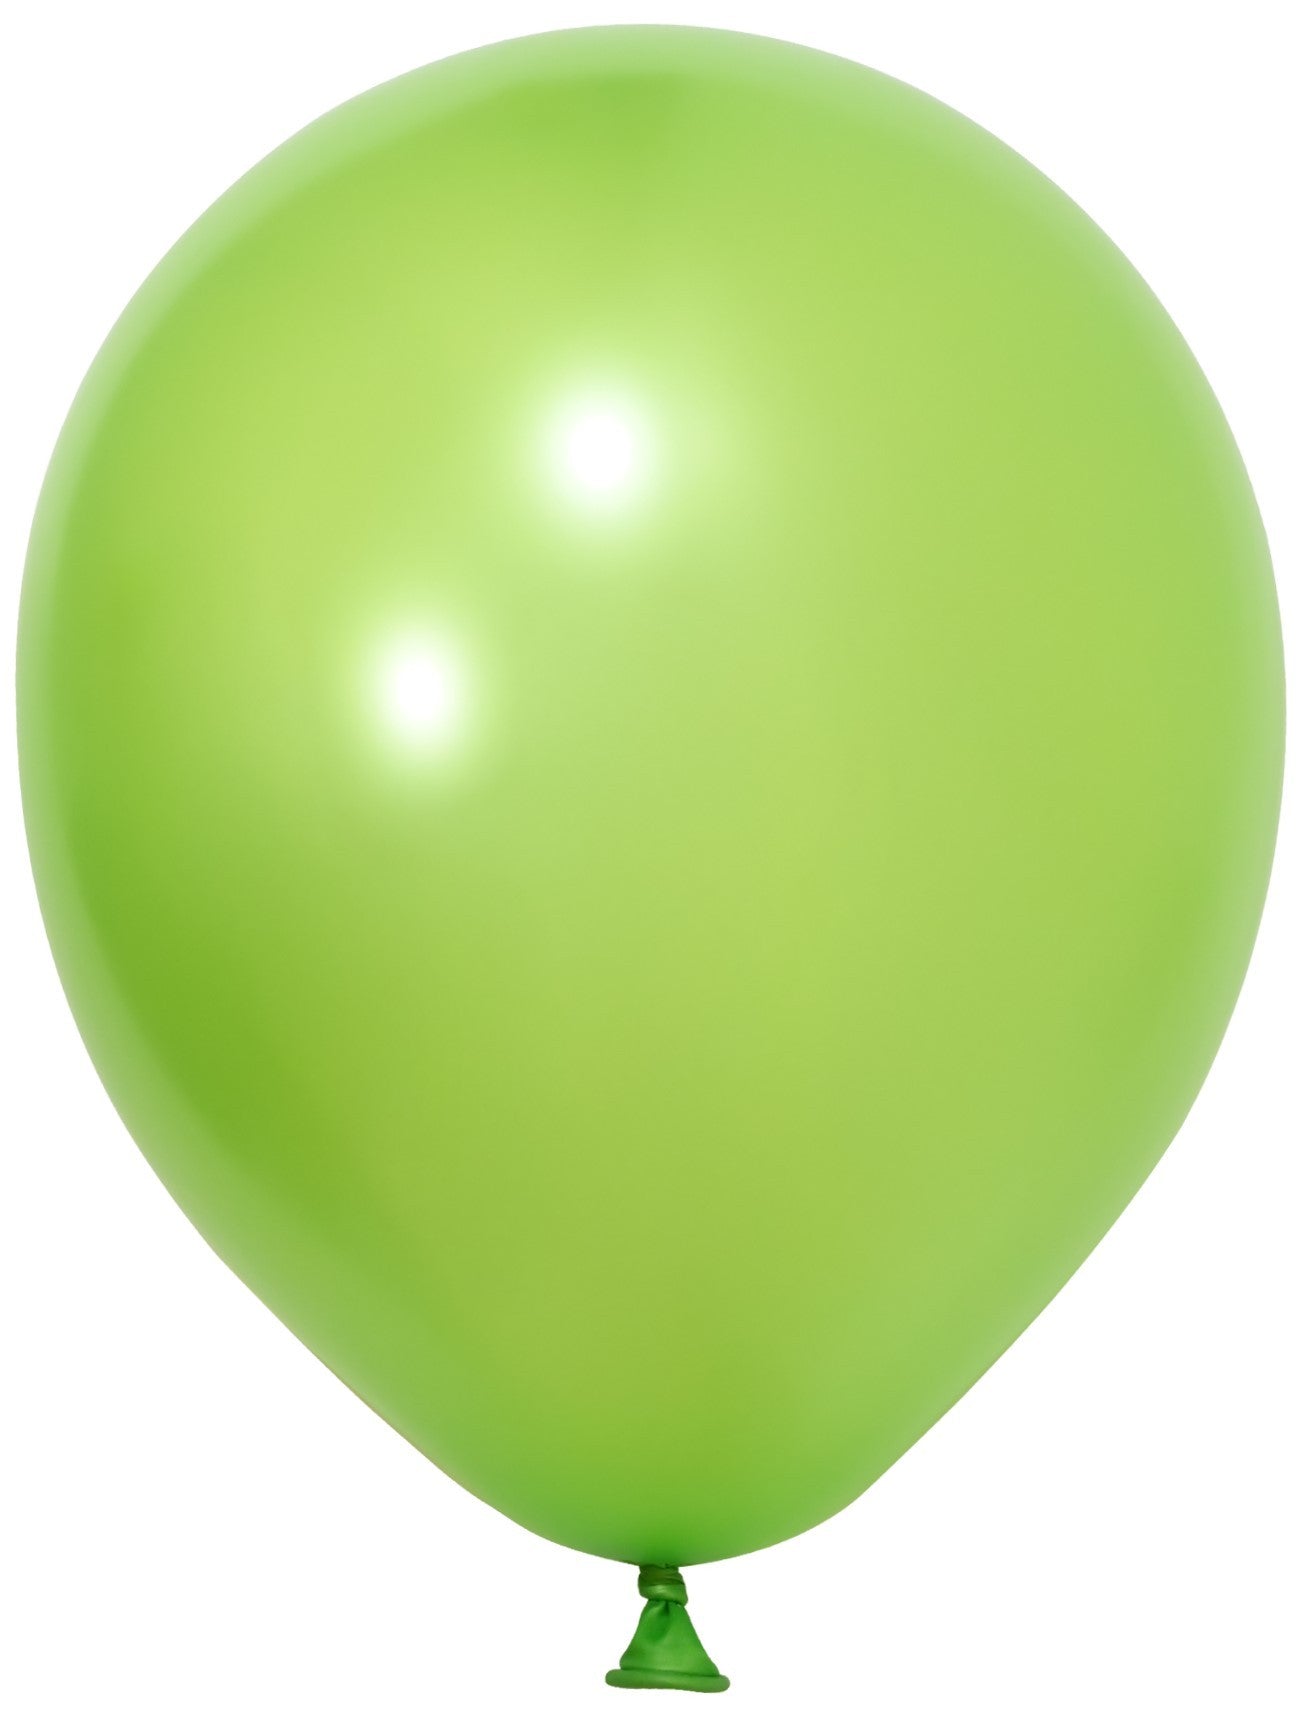 View Light Green Metallic Latex Balloon 10inch Pack of 100 information